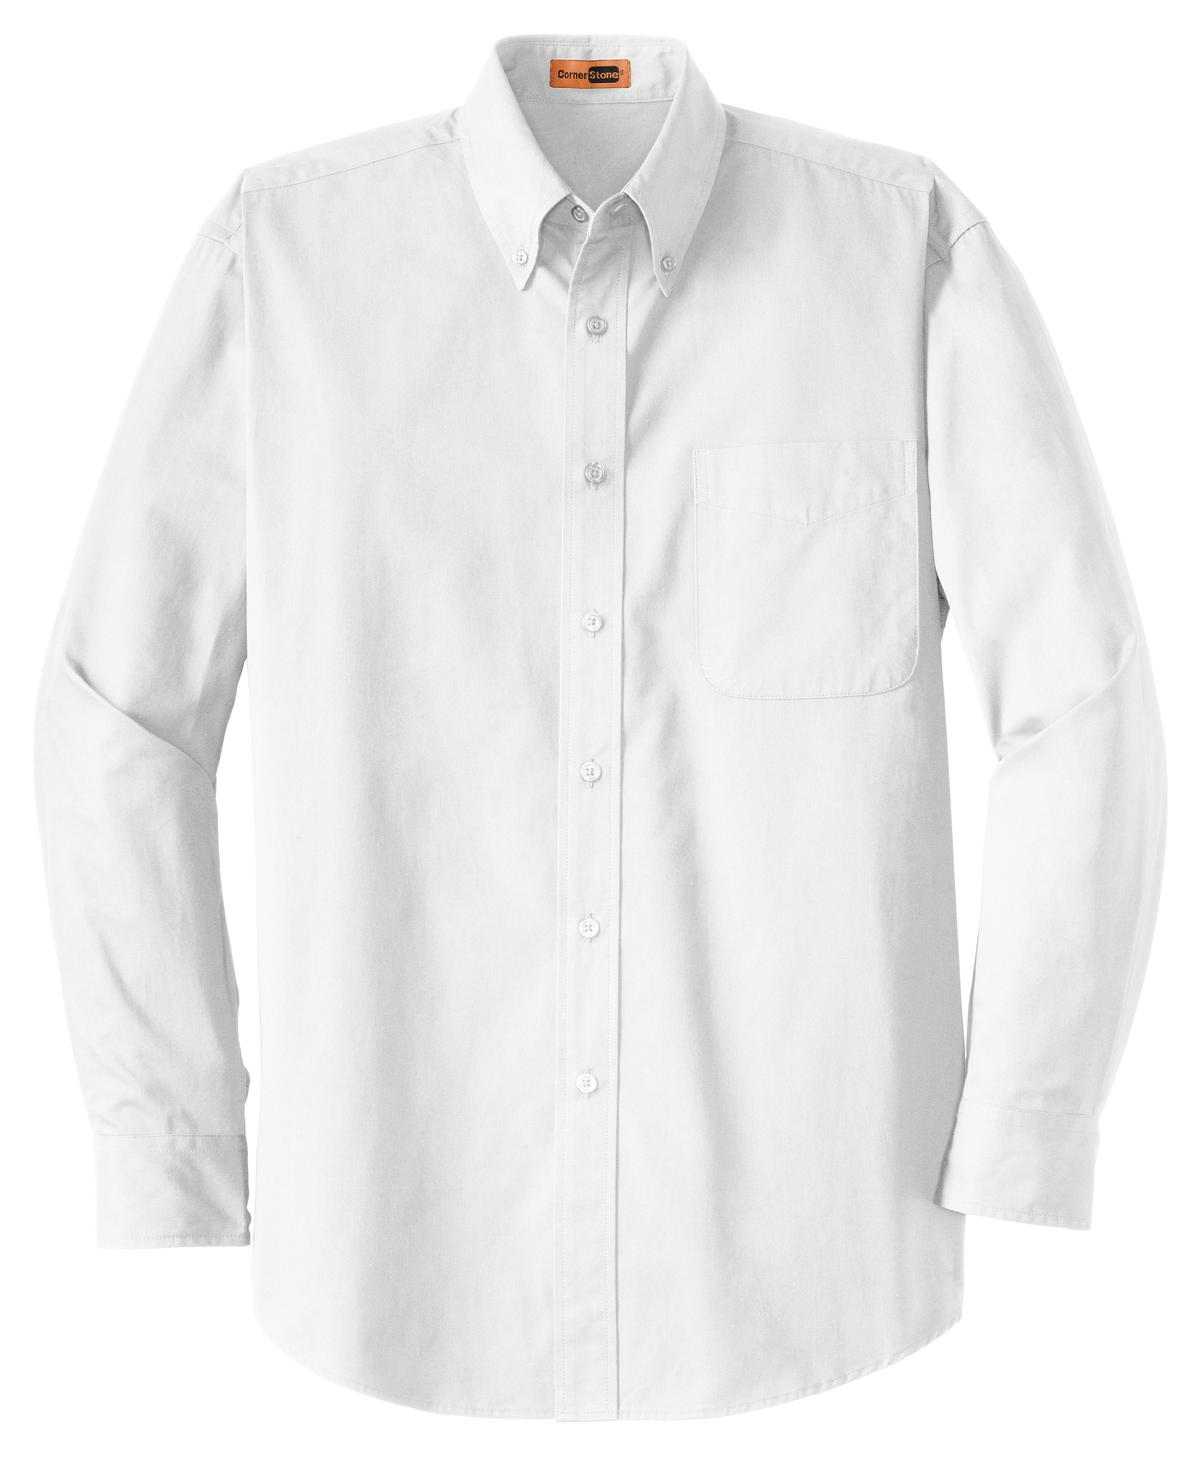 CornerStone SP17 Long Sleeve Superpro Twill Shirt - White - HIT a Double - 5